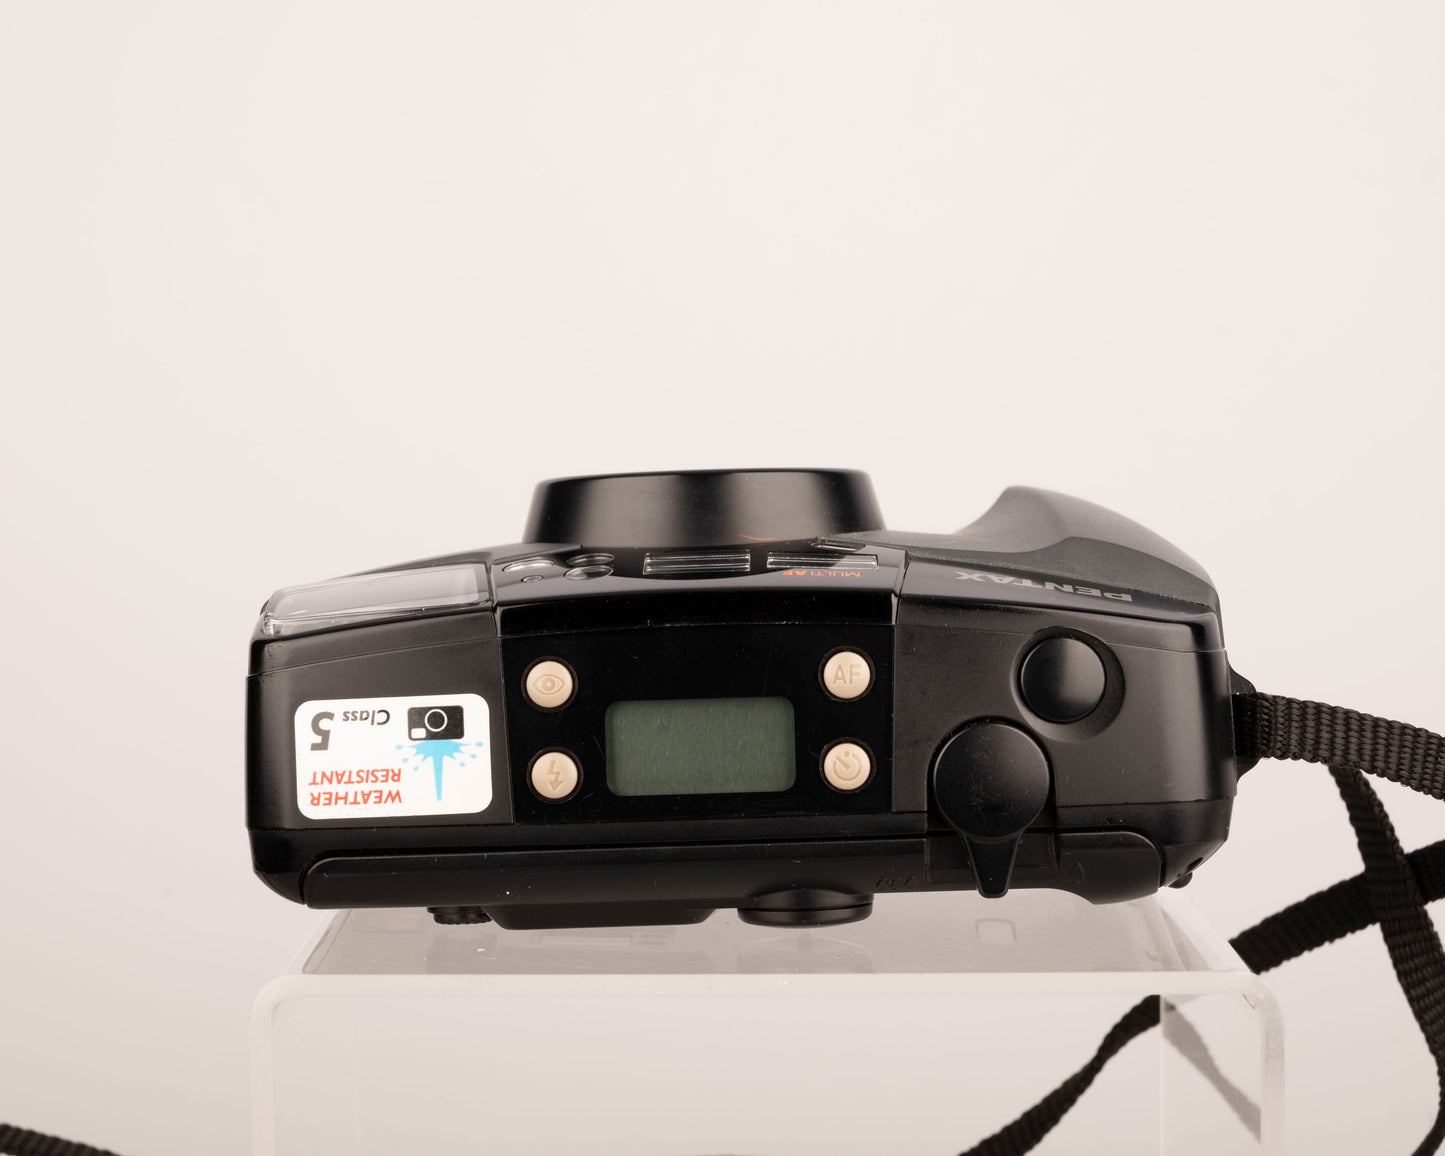 Pentax Espio 105WR 35mm camera w/ case (serial 1829263)